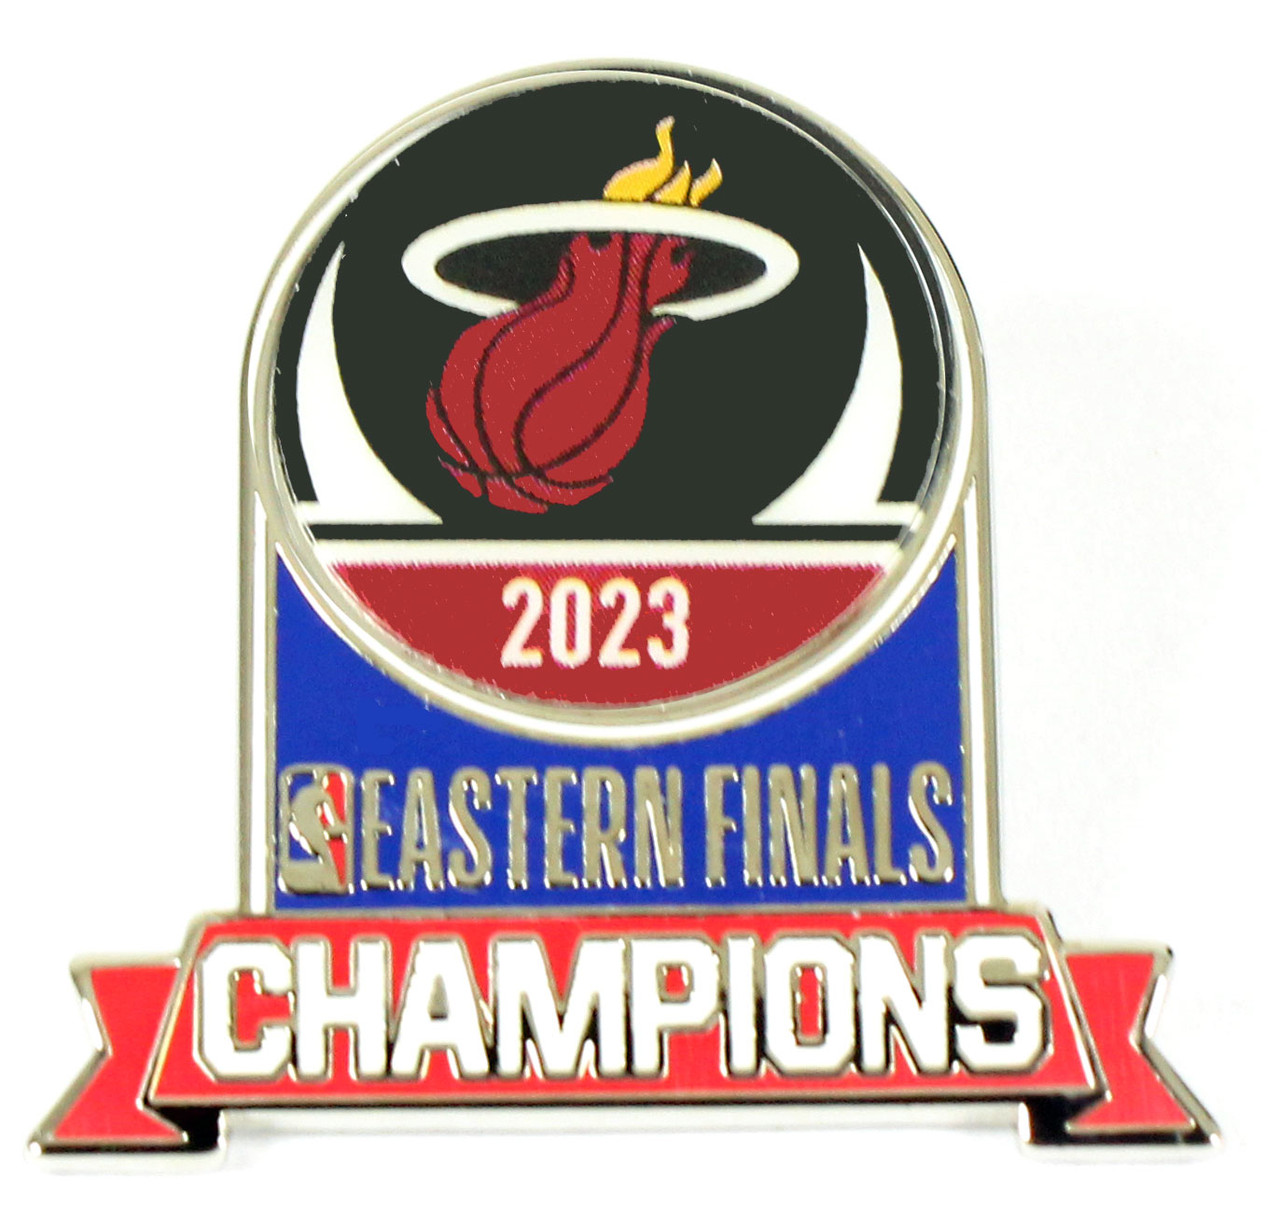 2004 Detroit Pistons NBA Finals Champions Logo Pin - Pistons 2nd  Championship